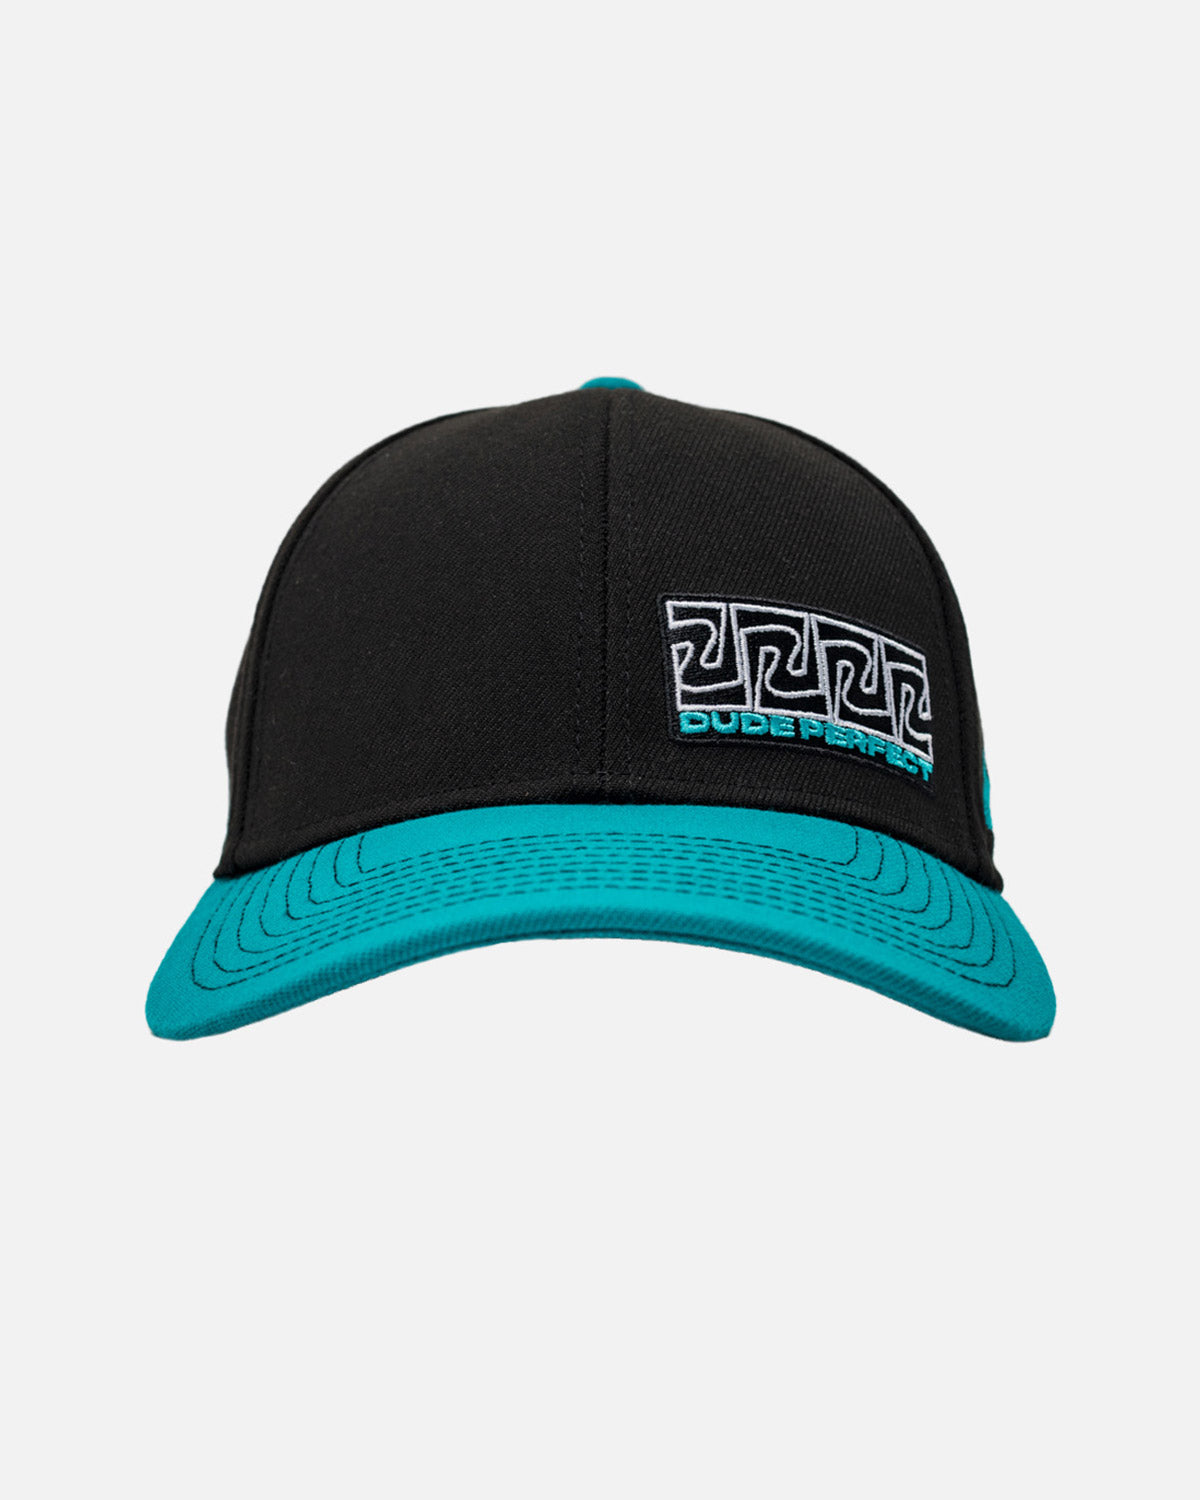 Repeater Stretch Fit Hat (Black/Mint)